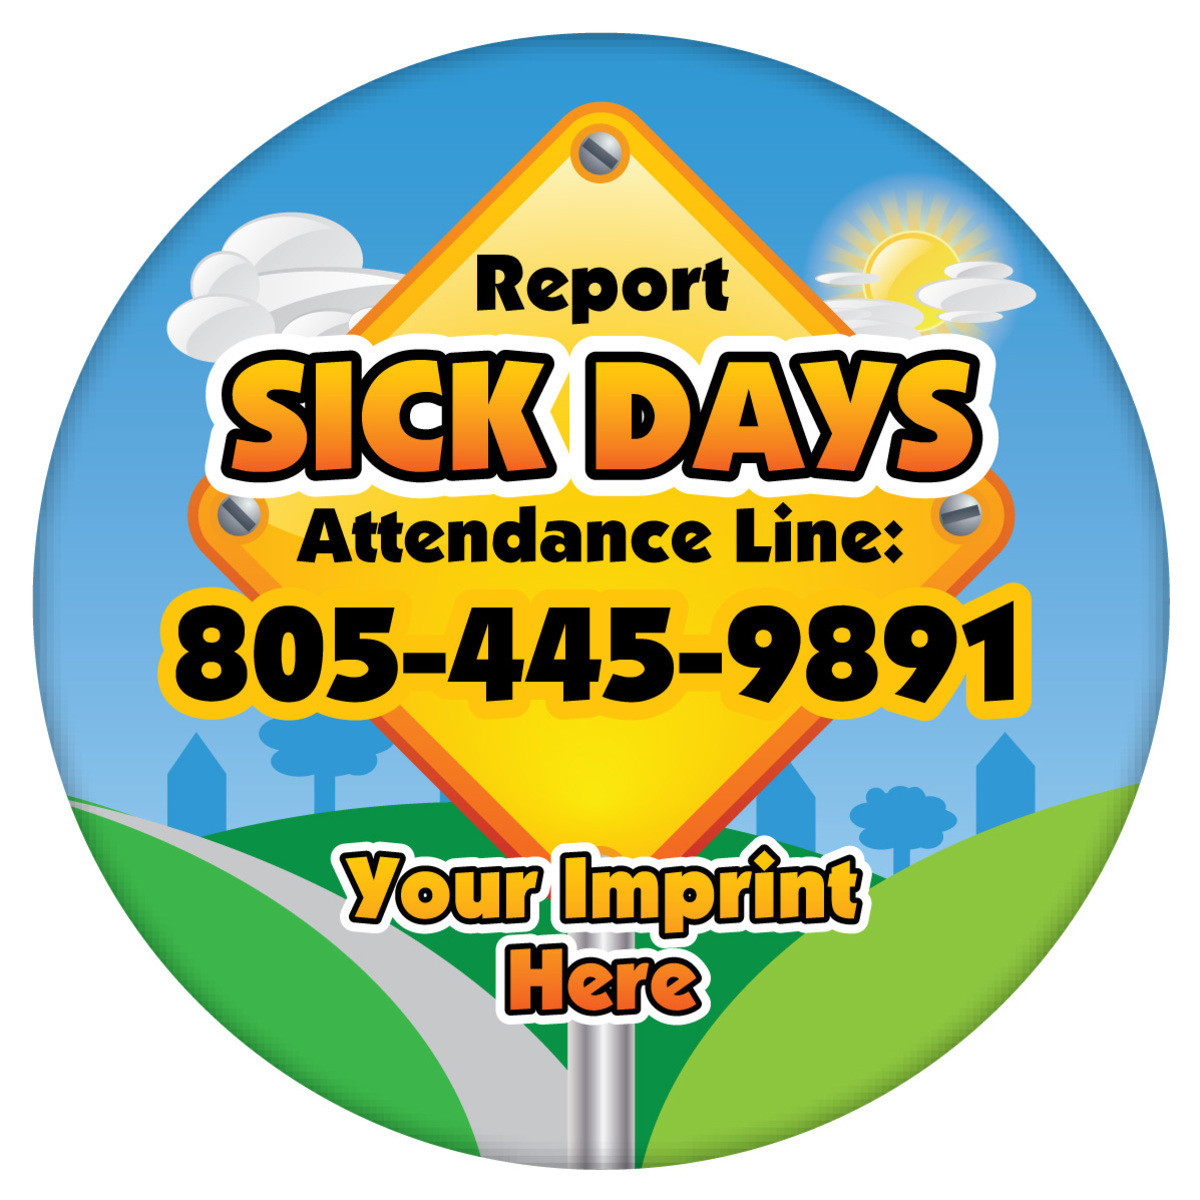 Custom Circular Statement Magnet- Report Sick Days 2